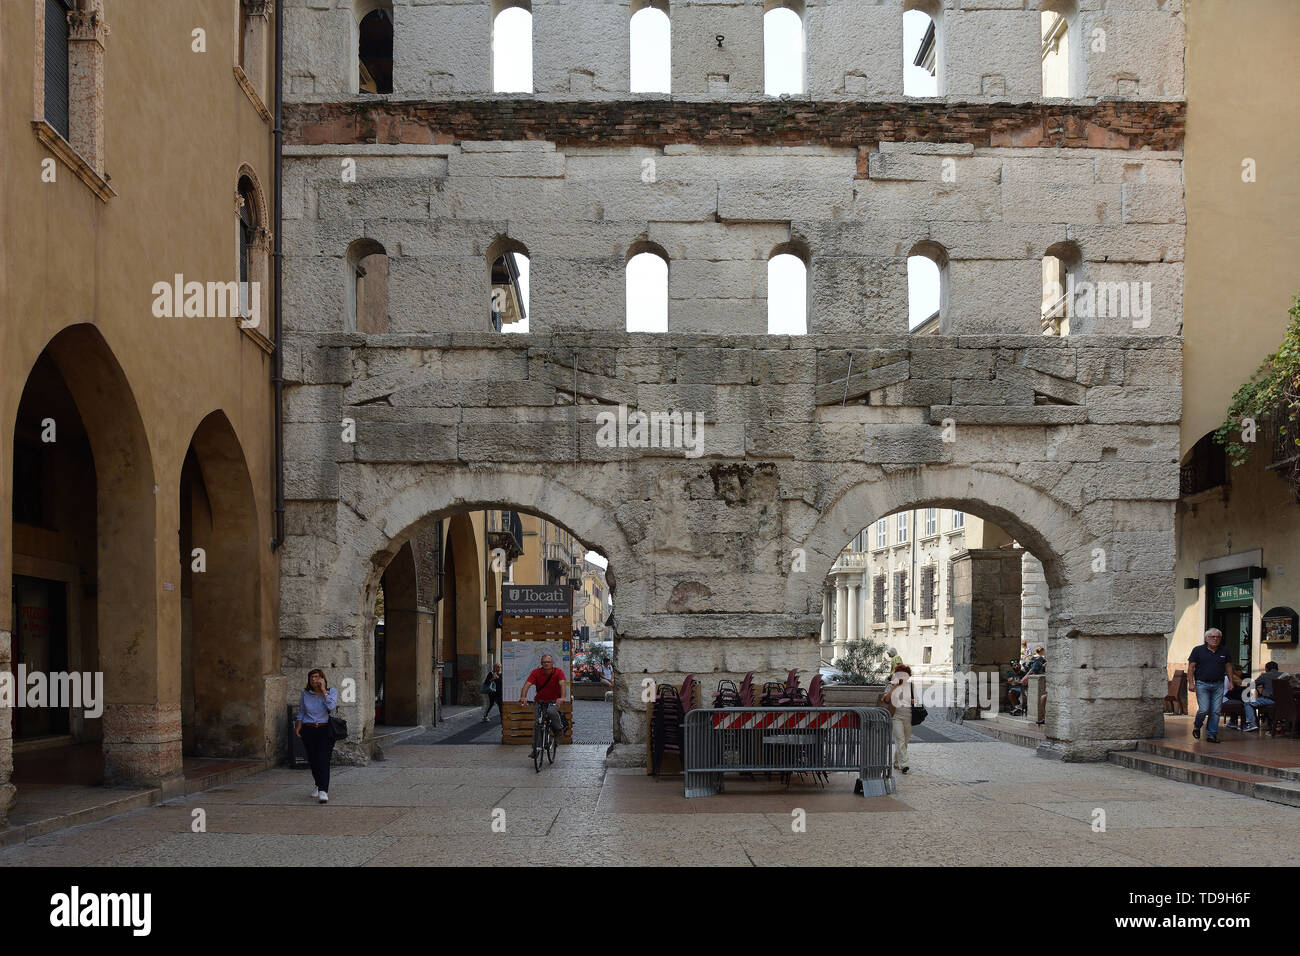 Italy porta borsari verona hi-res stock photography and images - Page 2 -  Alamy